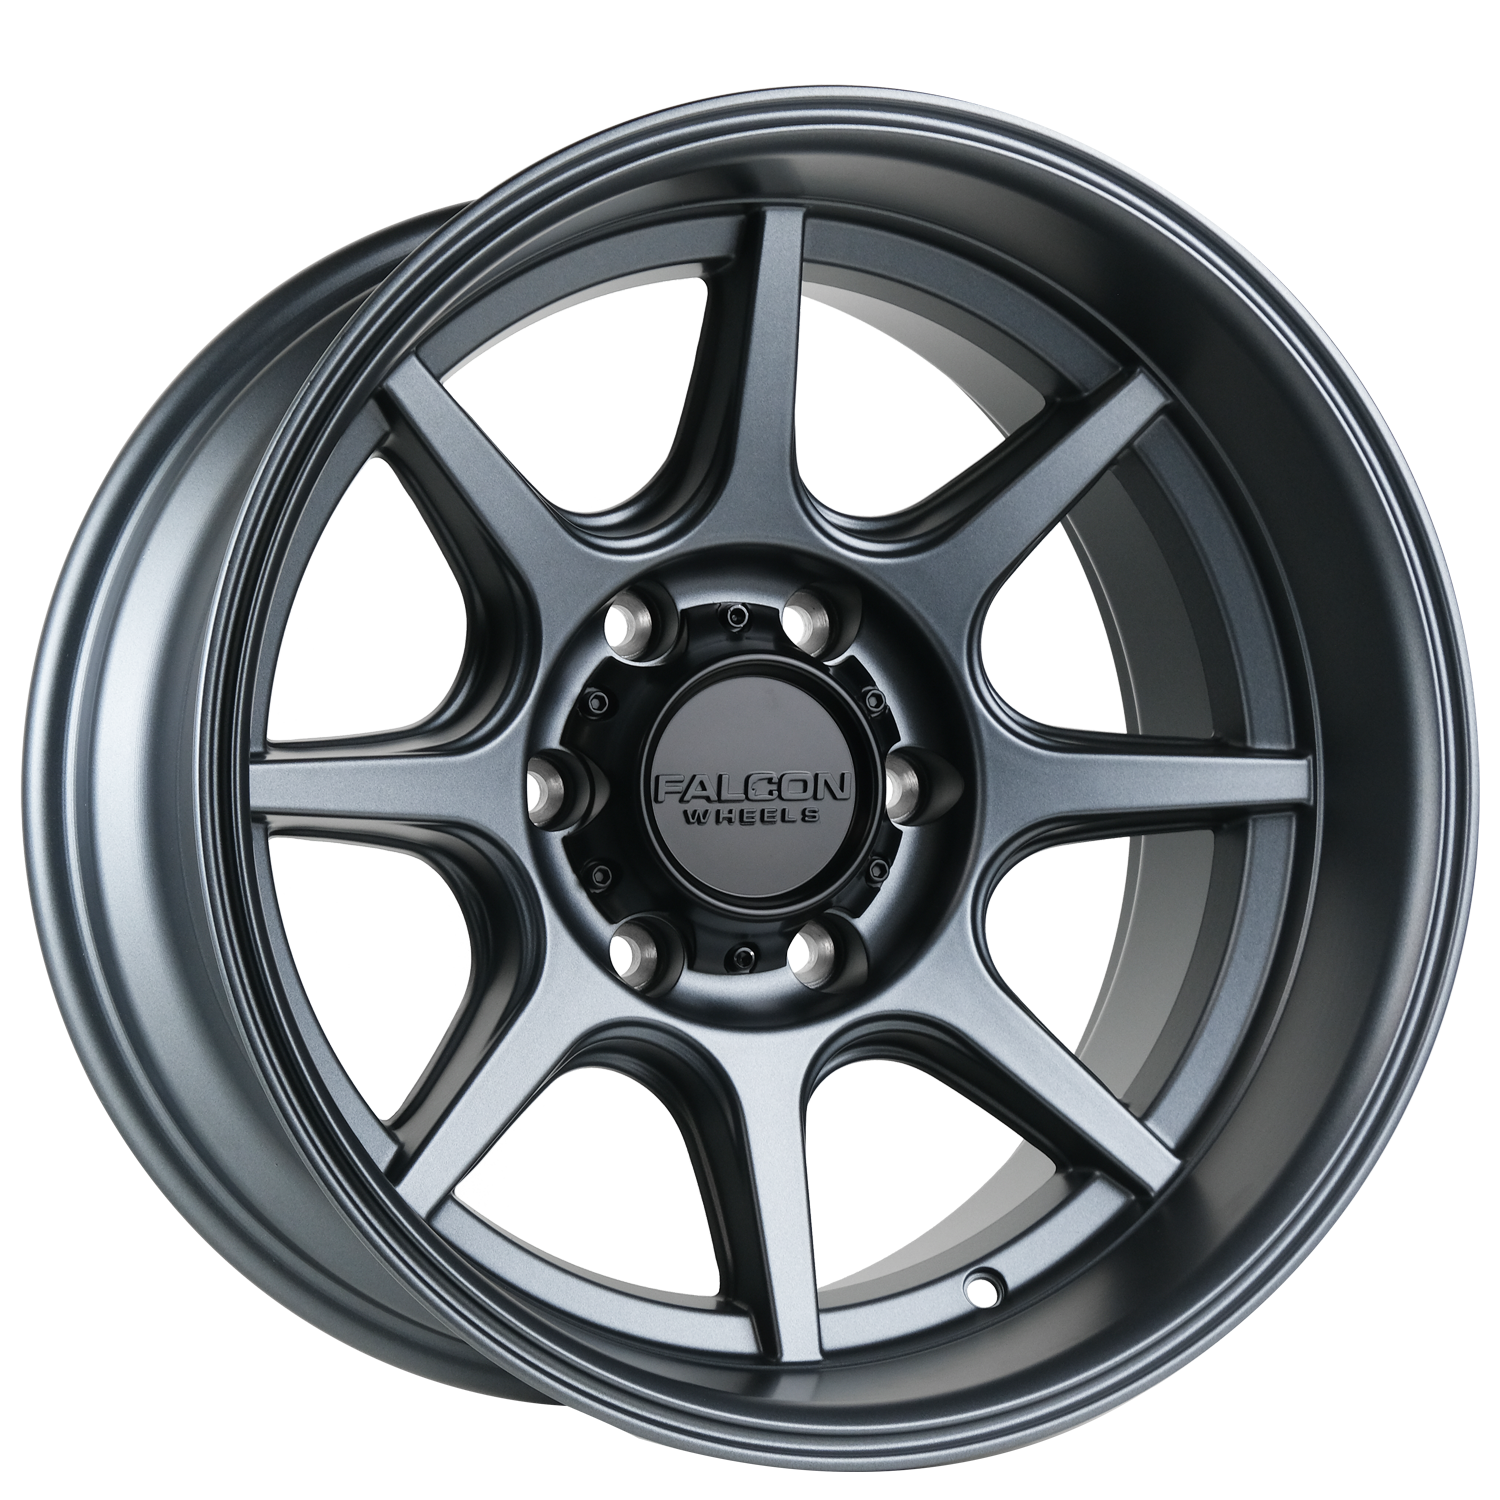 T8 "Seeker"- Matte Gunmetal 17x9 - Premium Wheels from Falcon Off-Road Wheels - Just $295! Shop now at Falcon Off-Road Wheels 